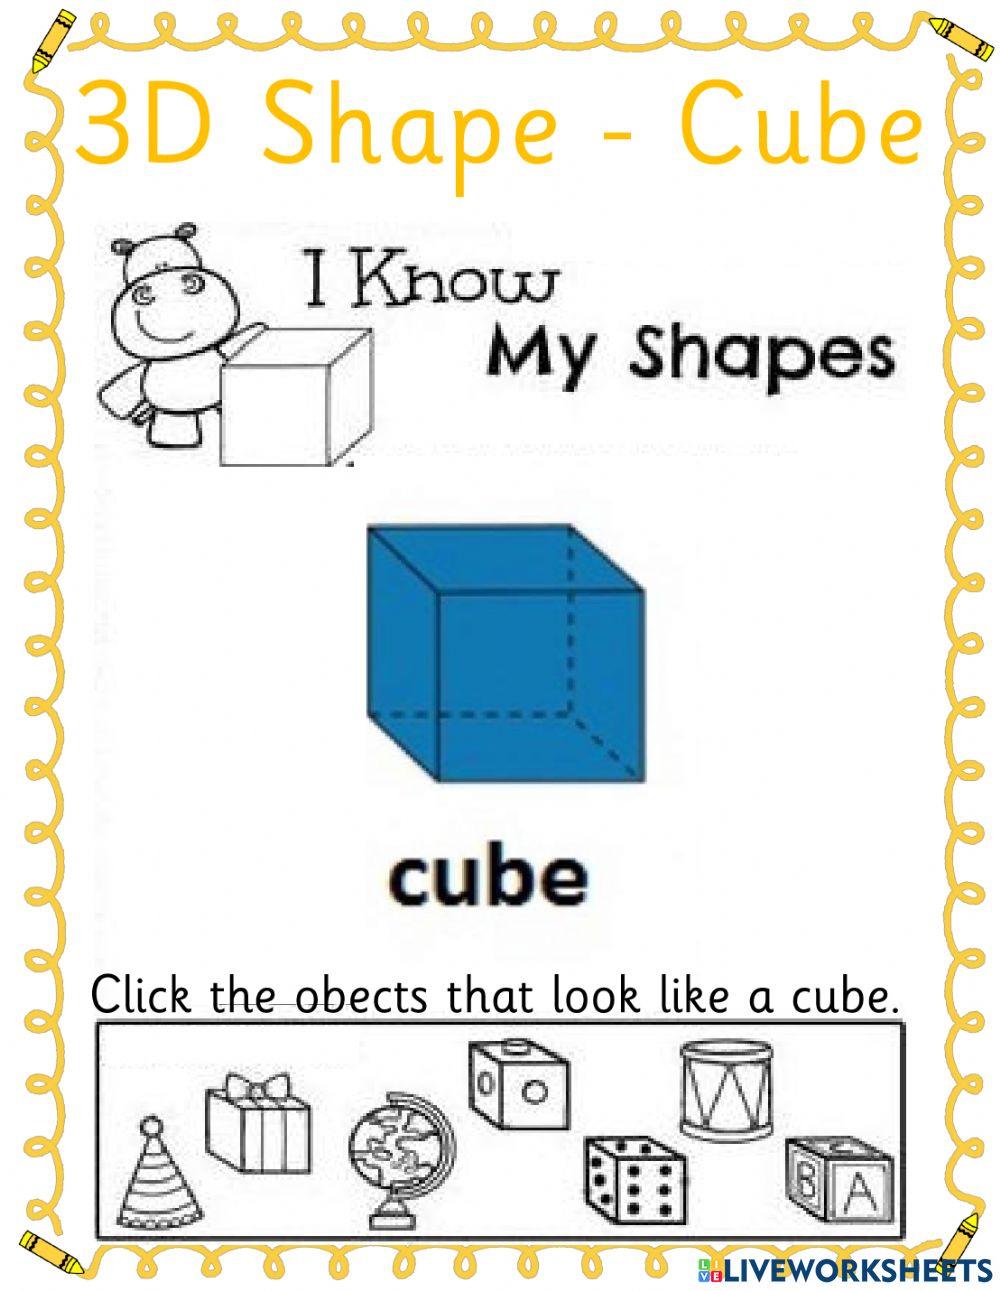 3D Shape - Cube